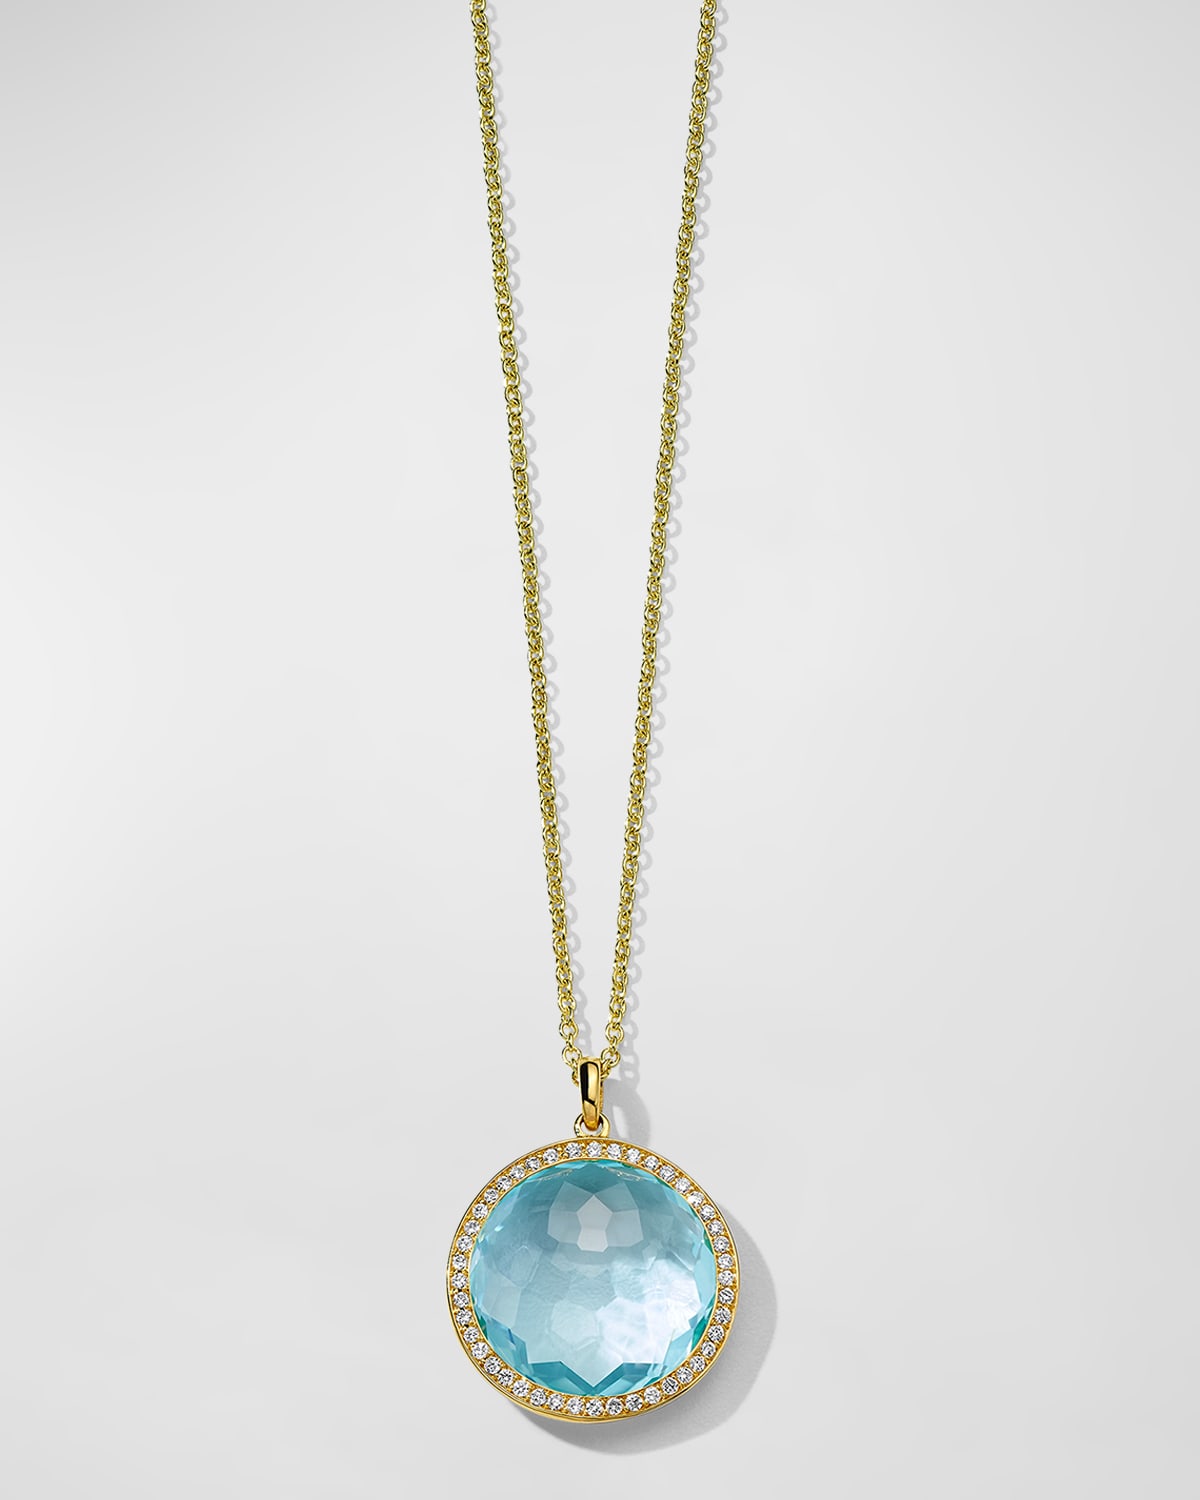 Medium Pendant Necklace in 18K Gold with Diamonds